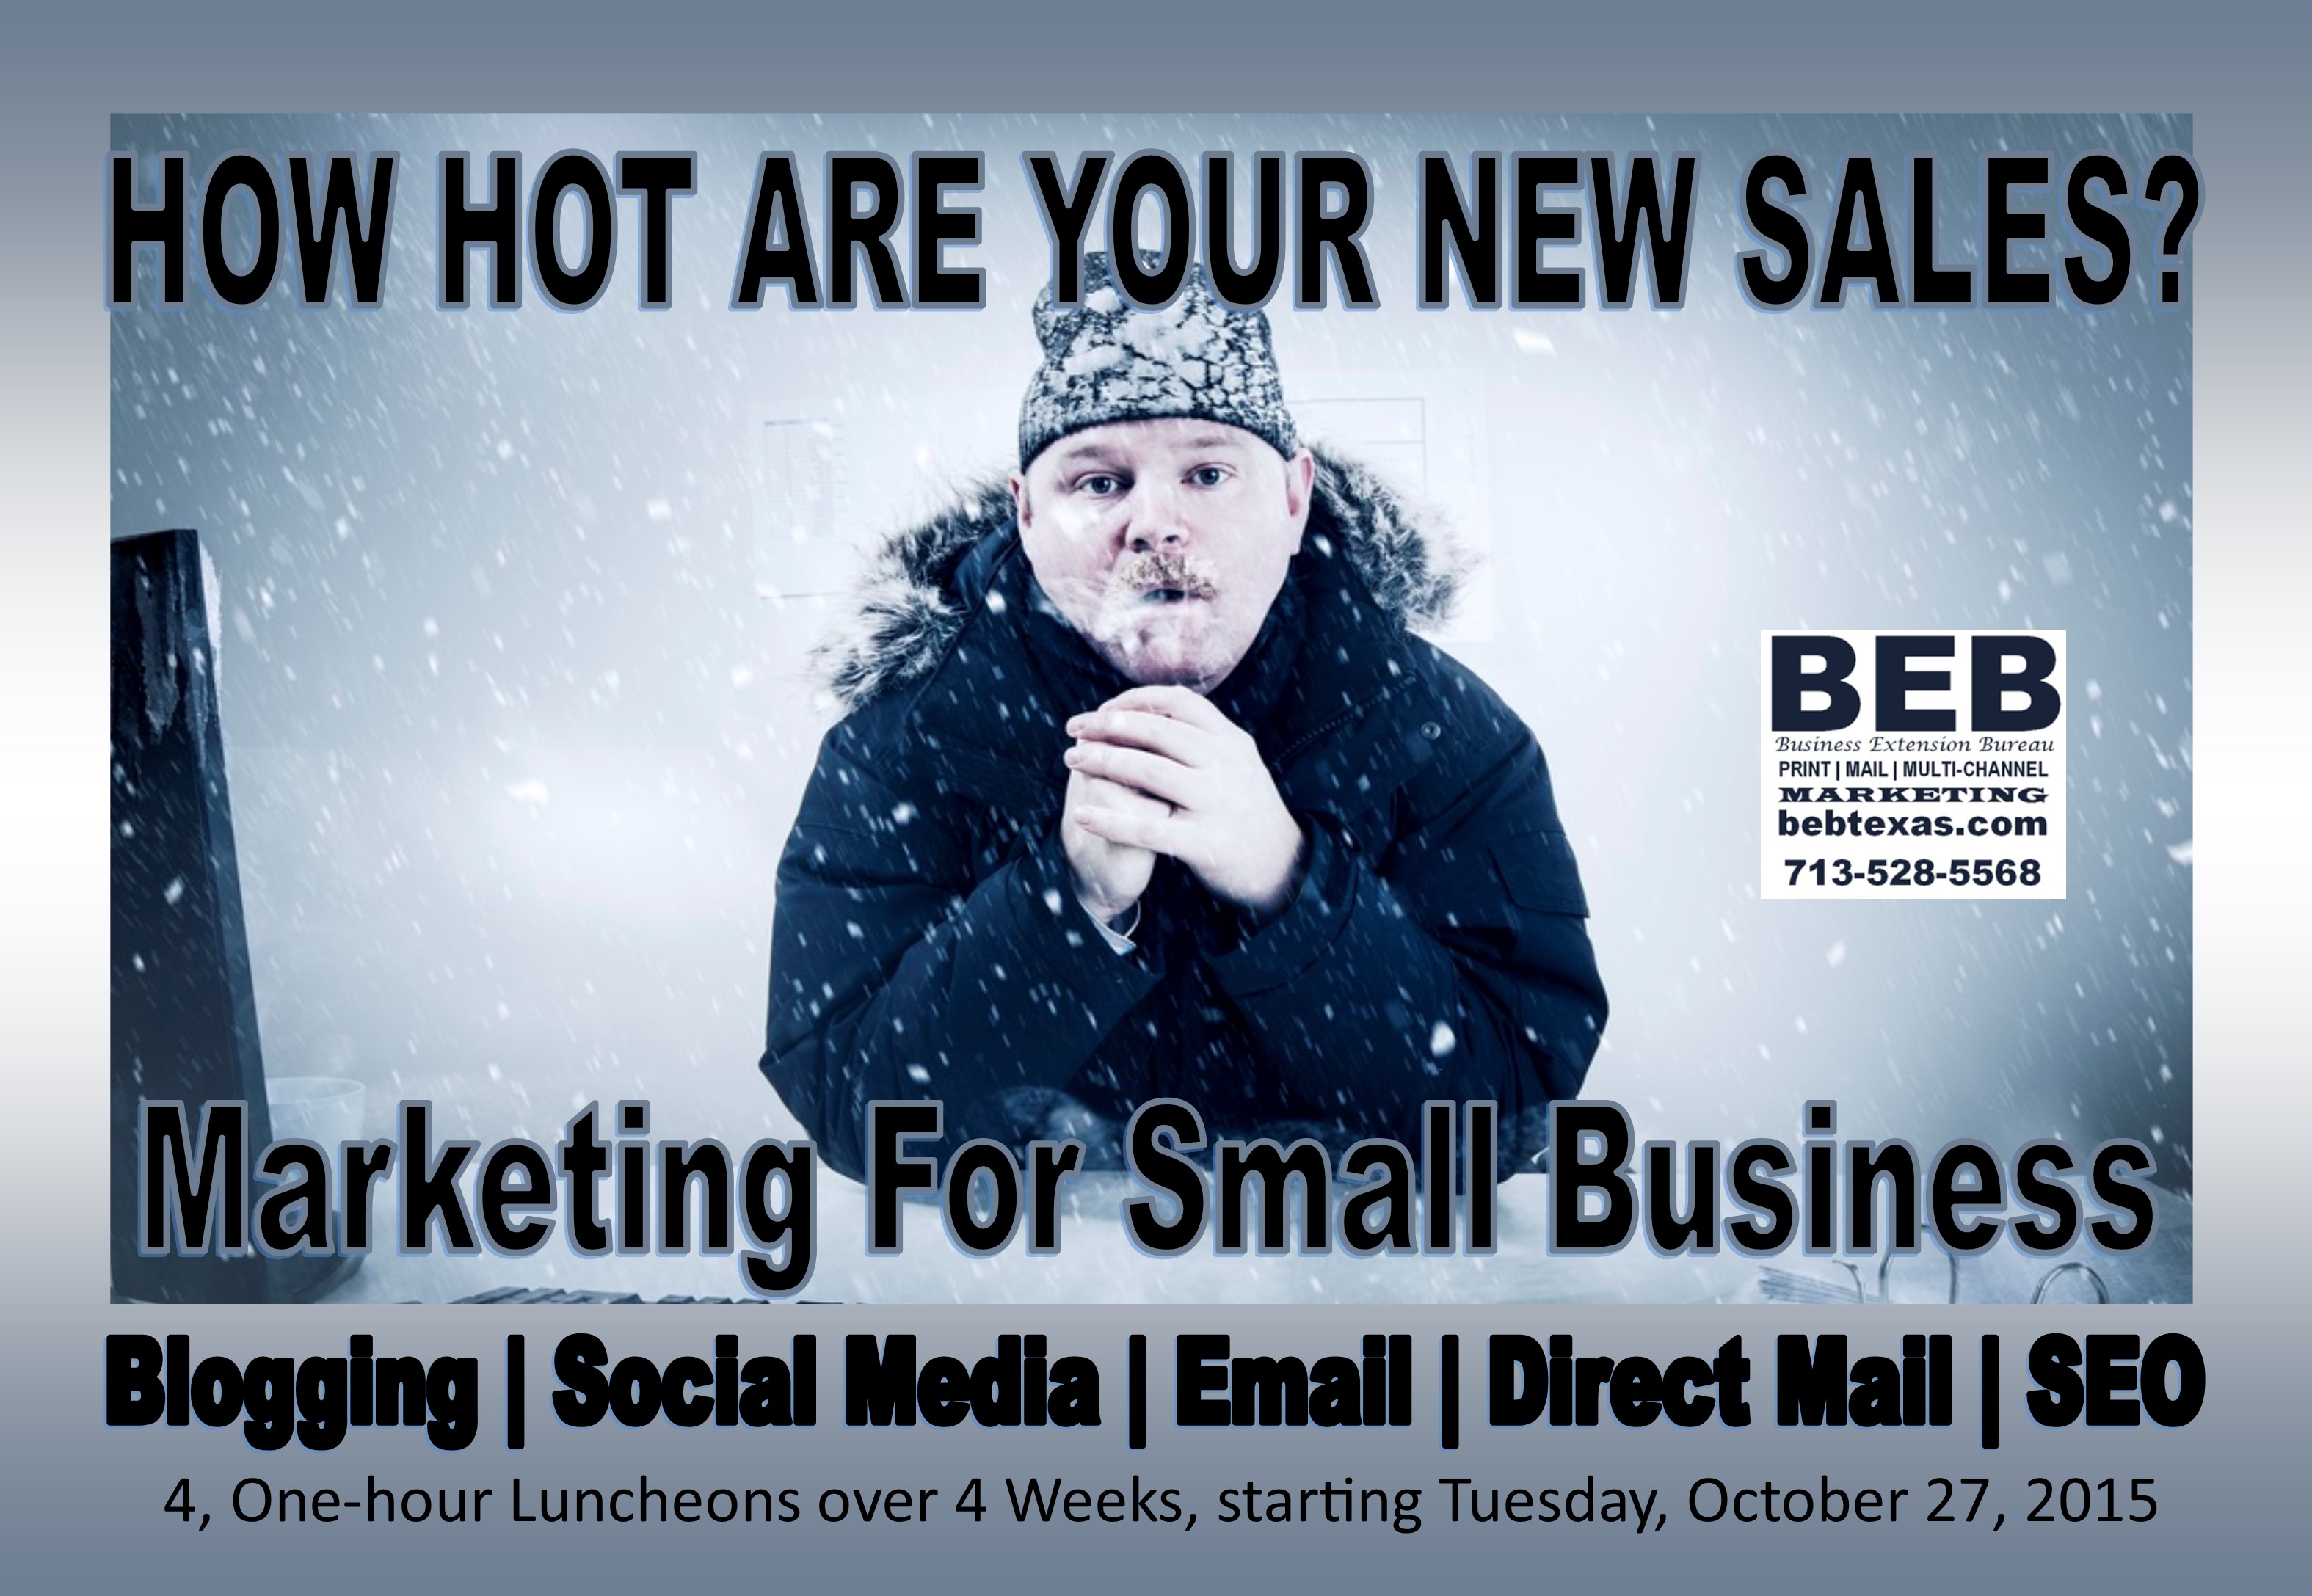 BEB Marketing for Small Business 2015 Fall Seminar Series